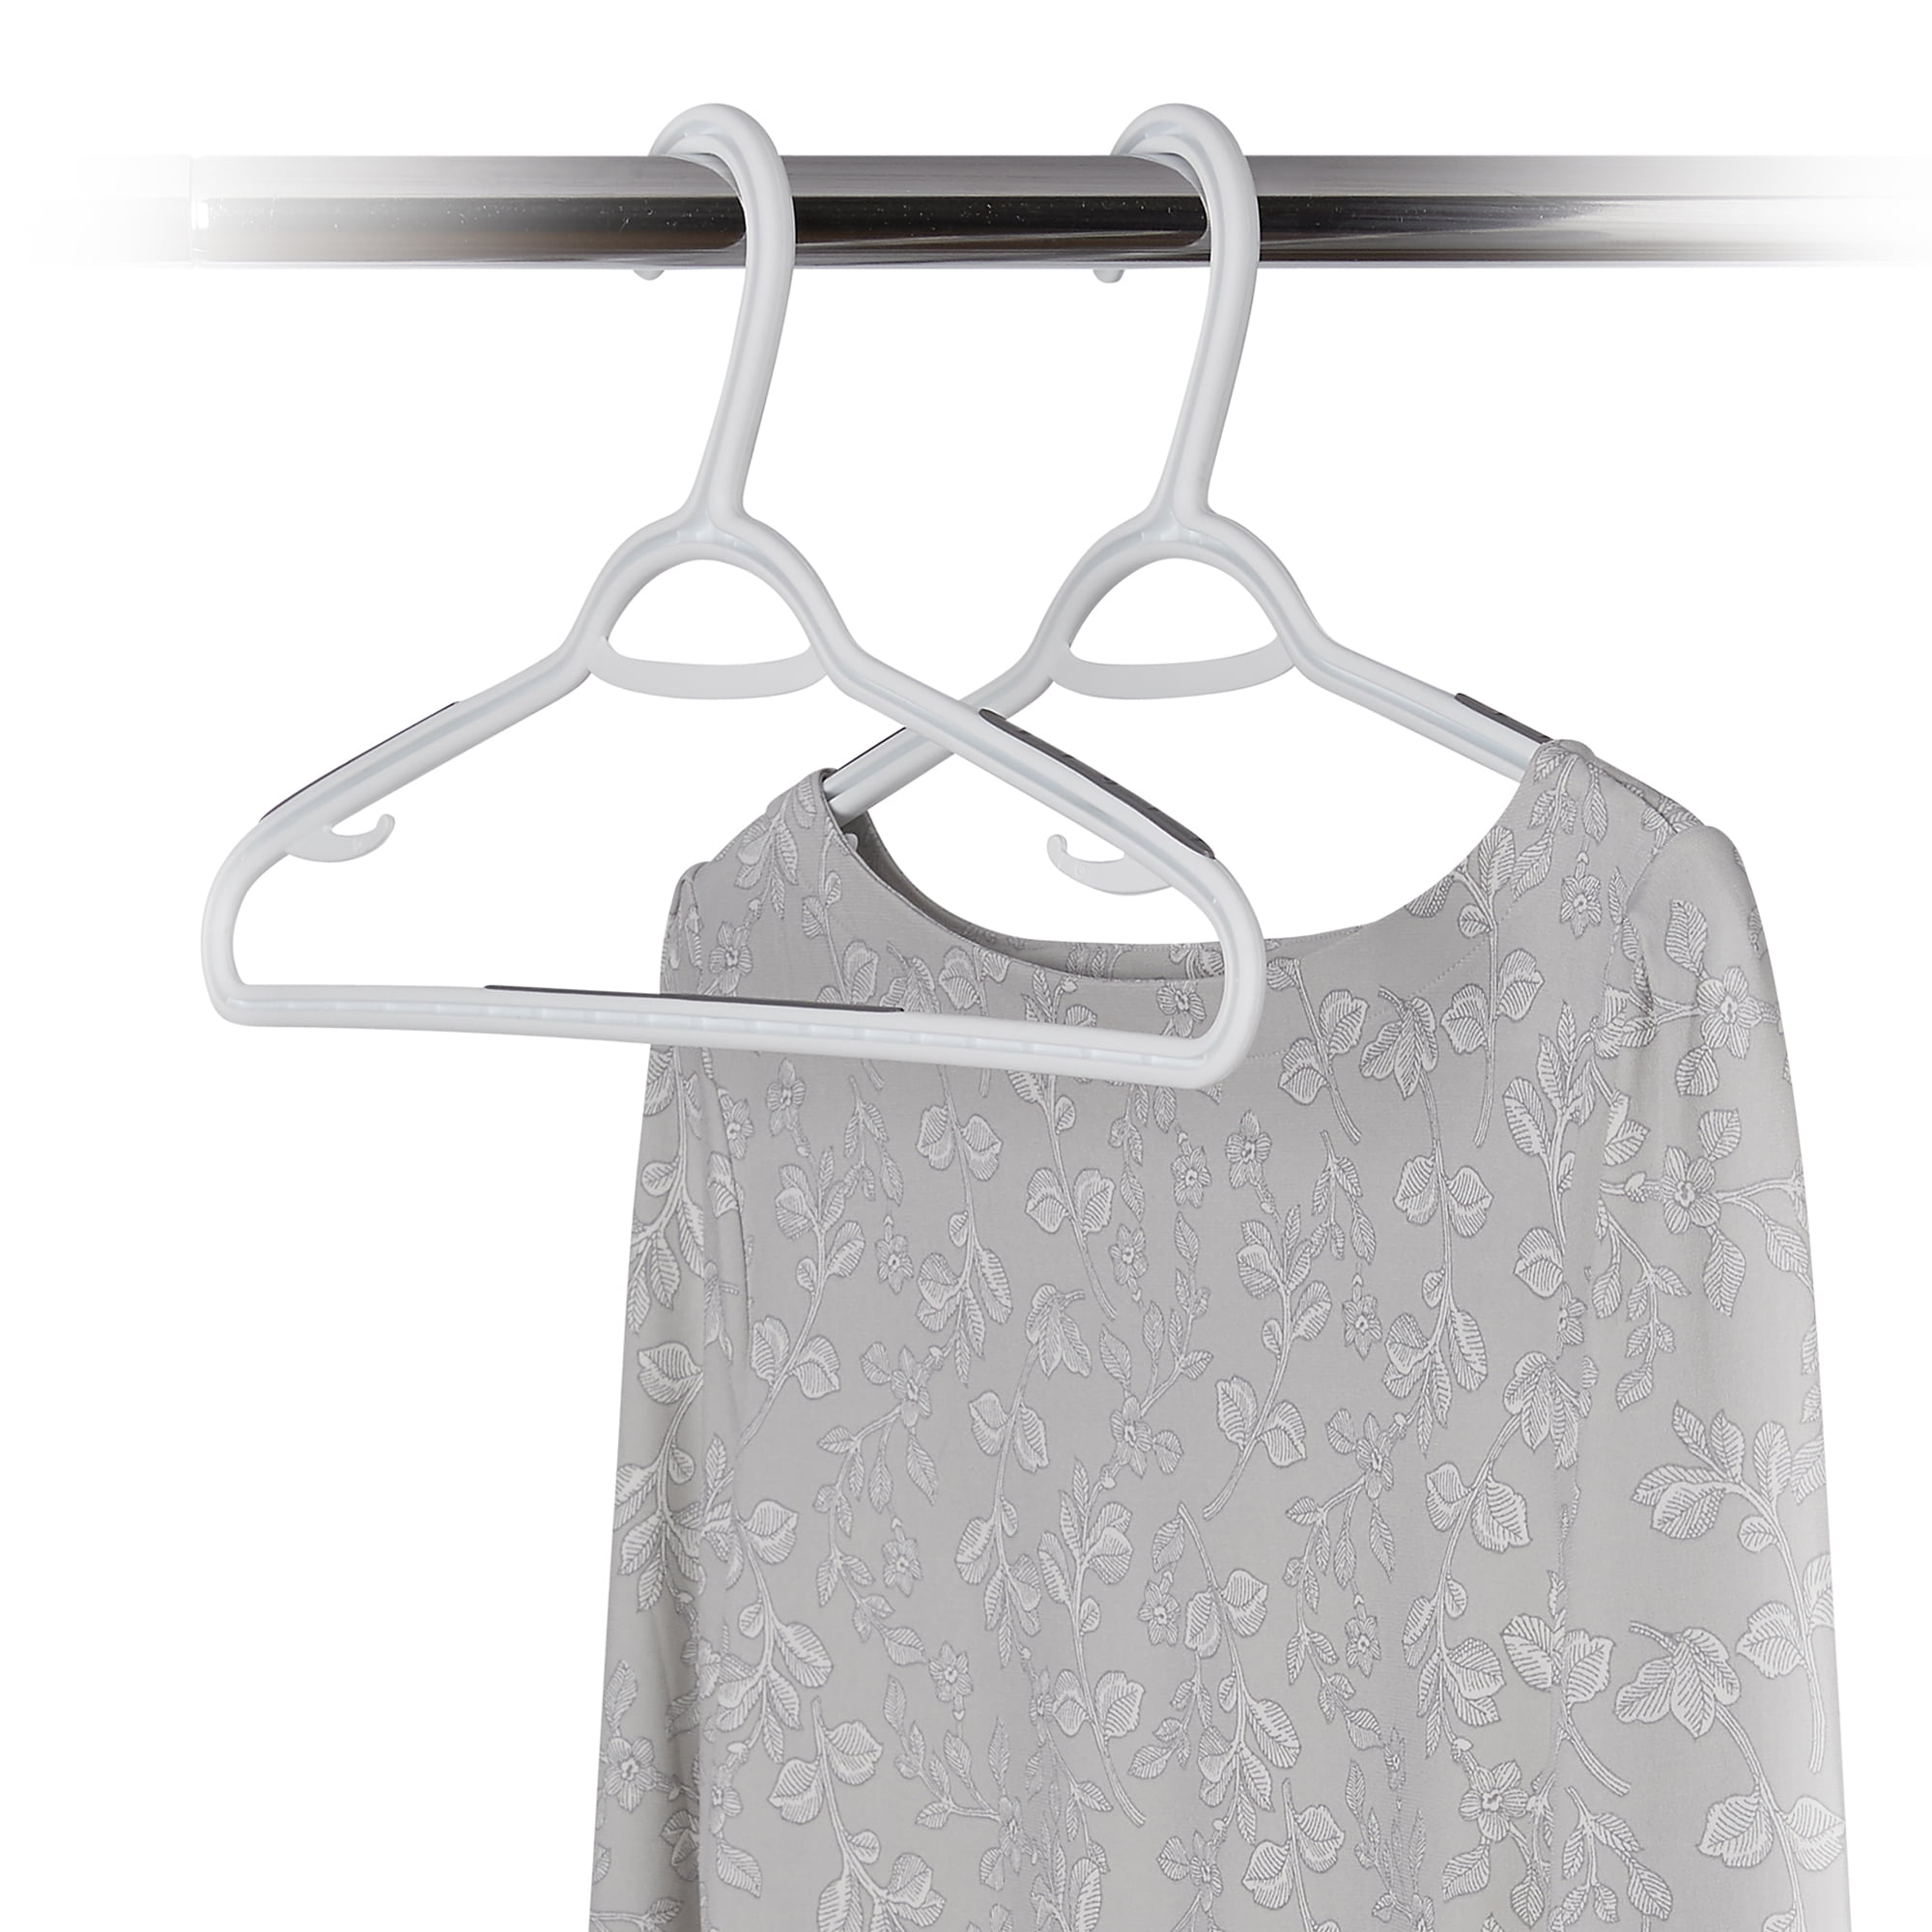 Mainstays Non-Slip Clothes Hangers, 10 Pack, White, Durable Plastic, TPE  Strips